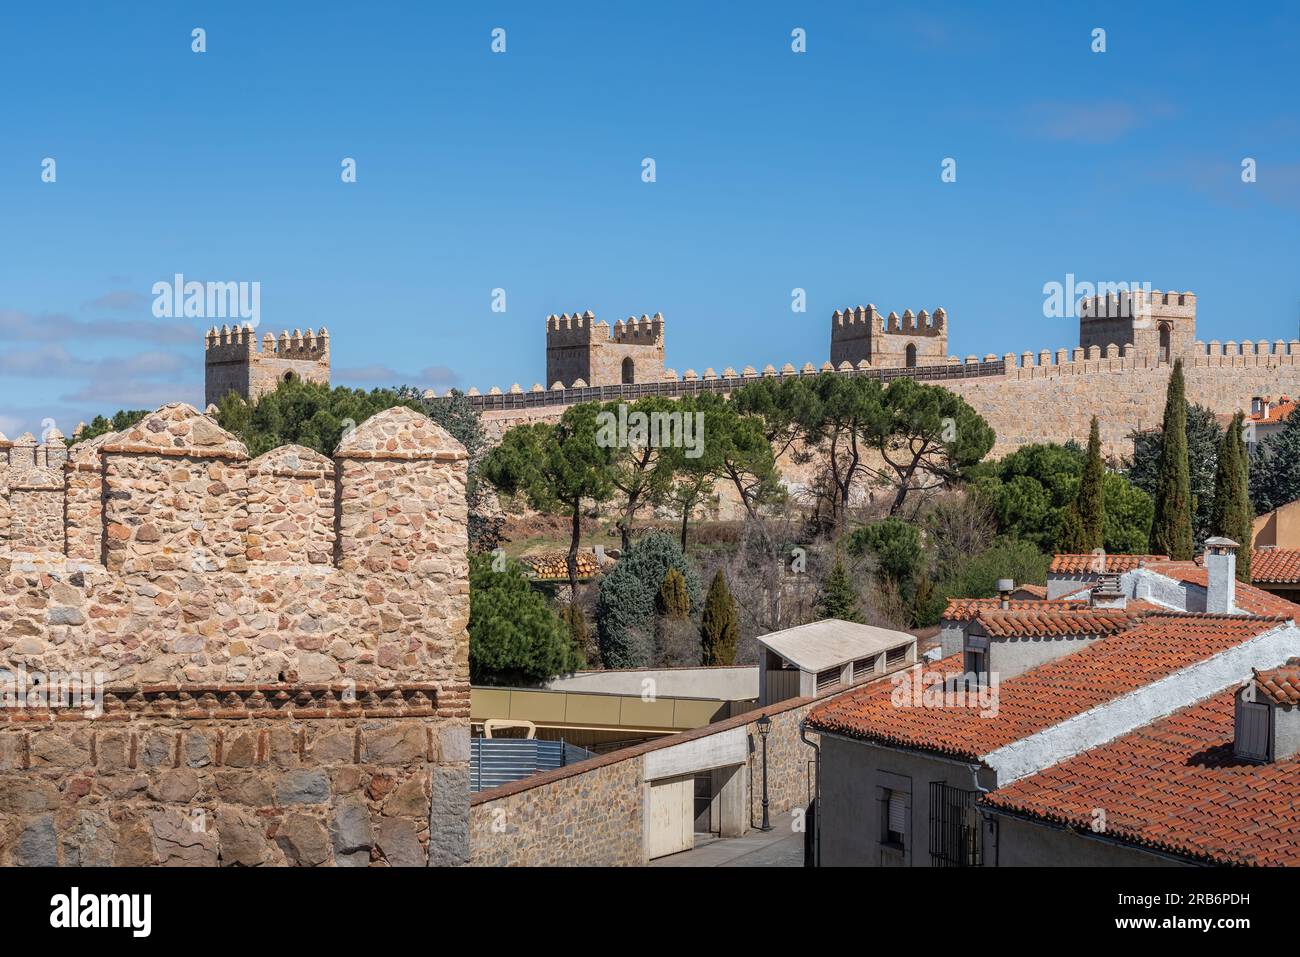 Medieval Walls of Avila Battlements and Towers - Avila, Spain Stock Photo